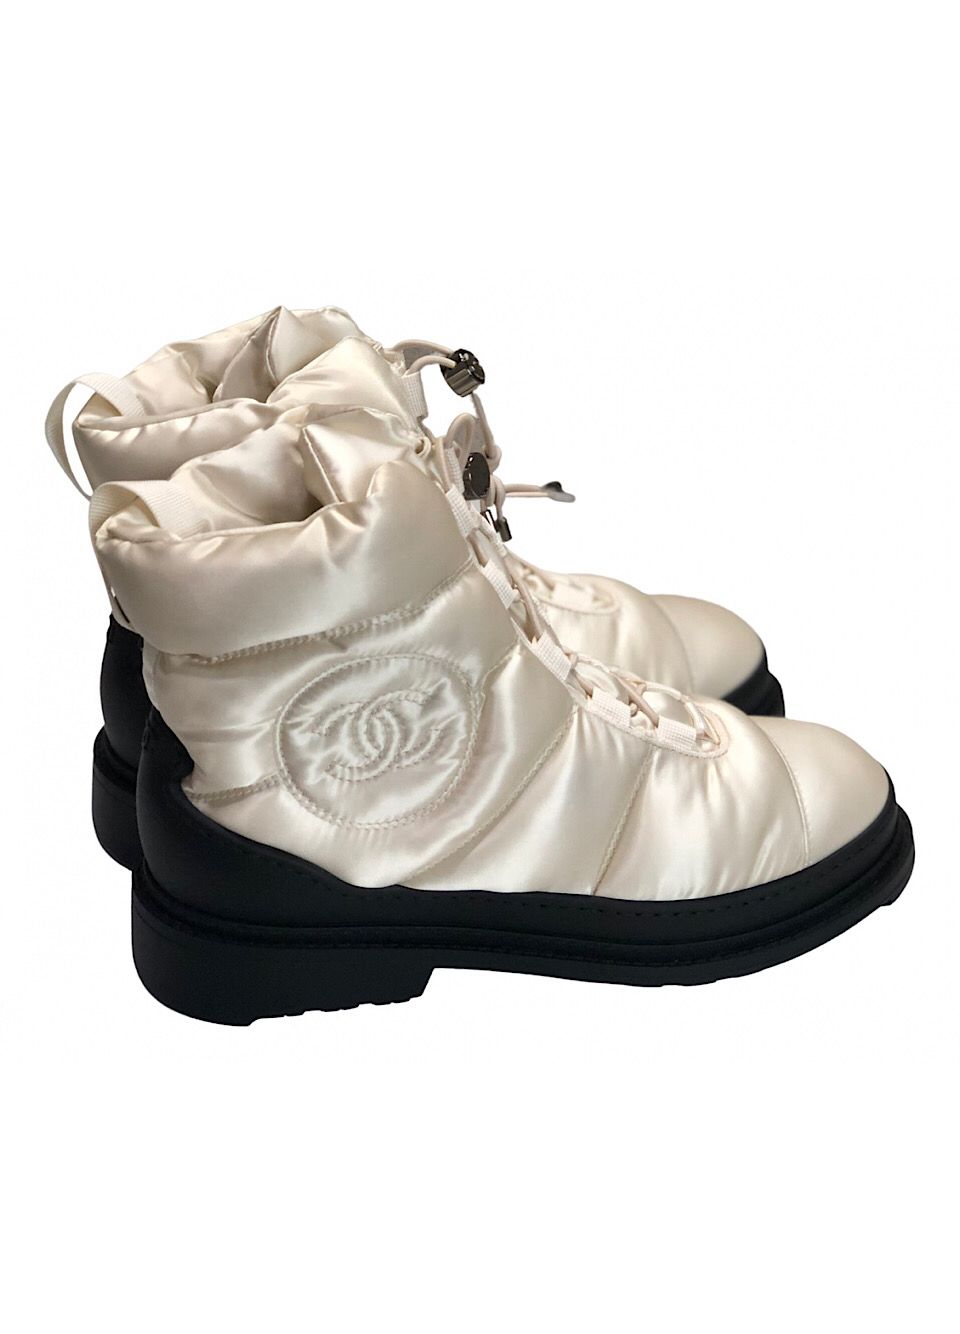 CHANEL, Shoes, Chanel Fur Logo Black White Snow Boots Sz 385